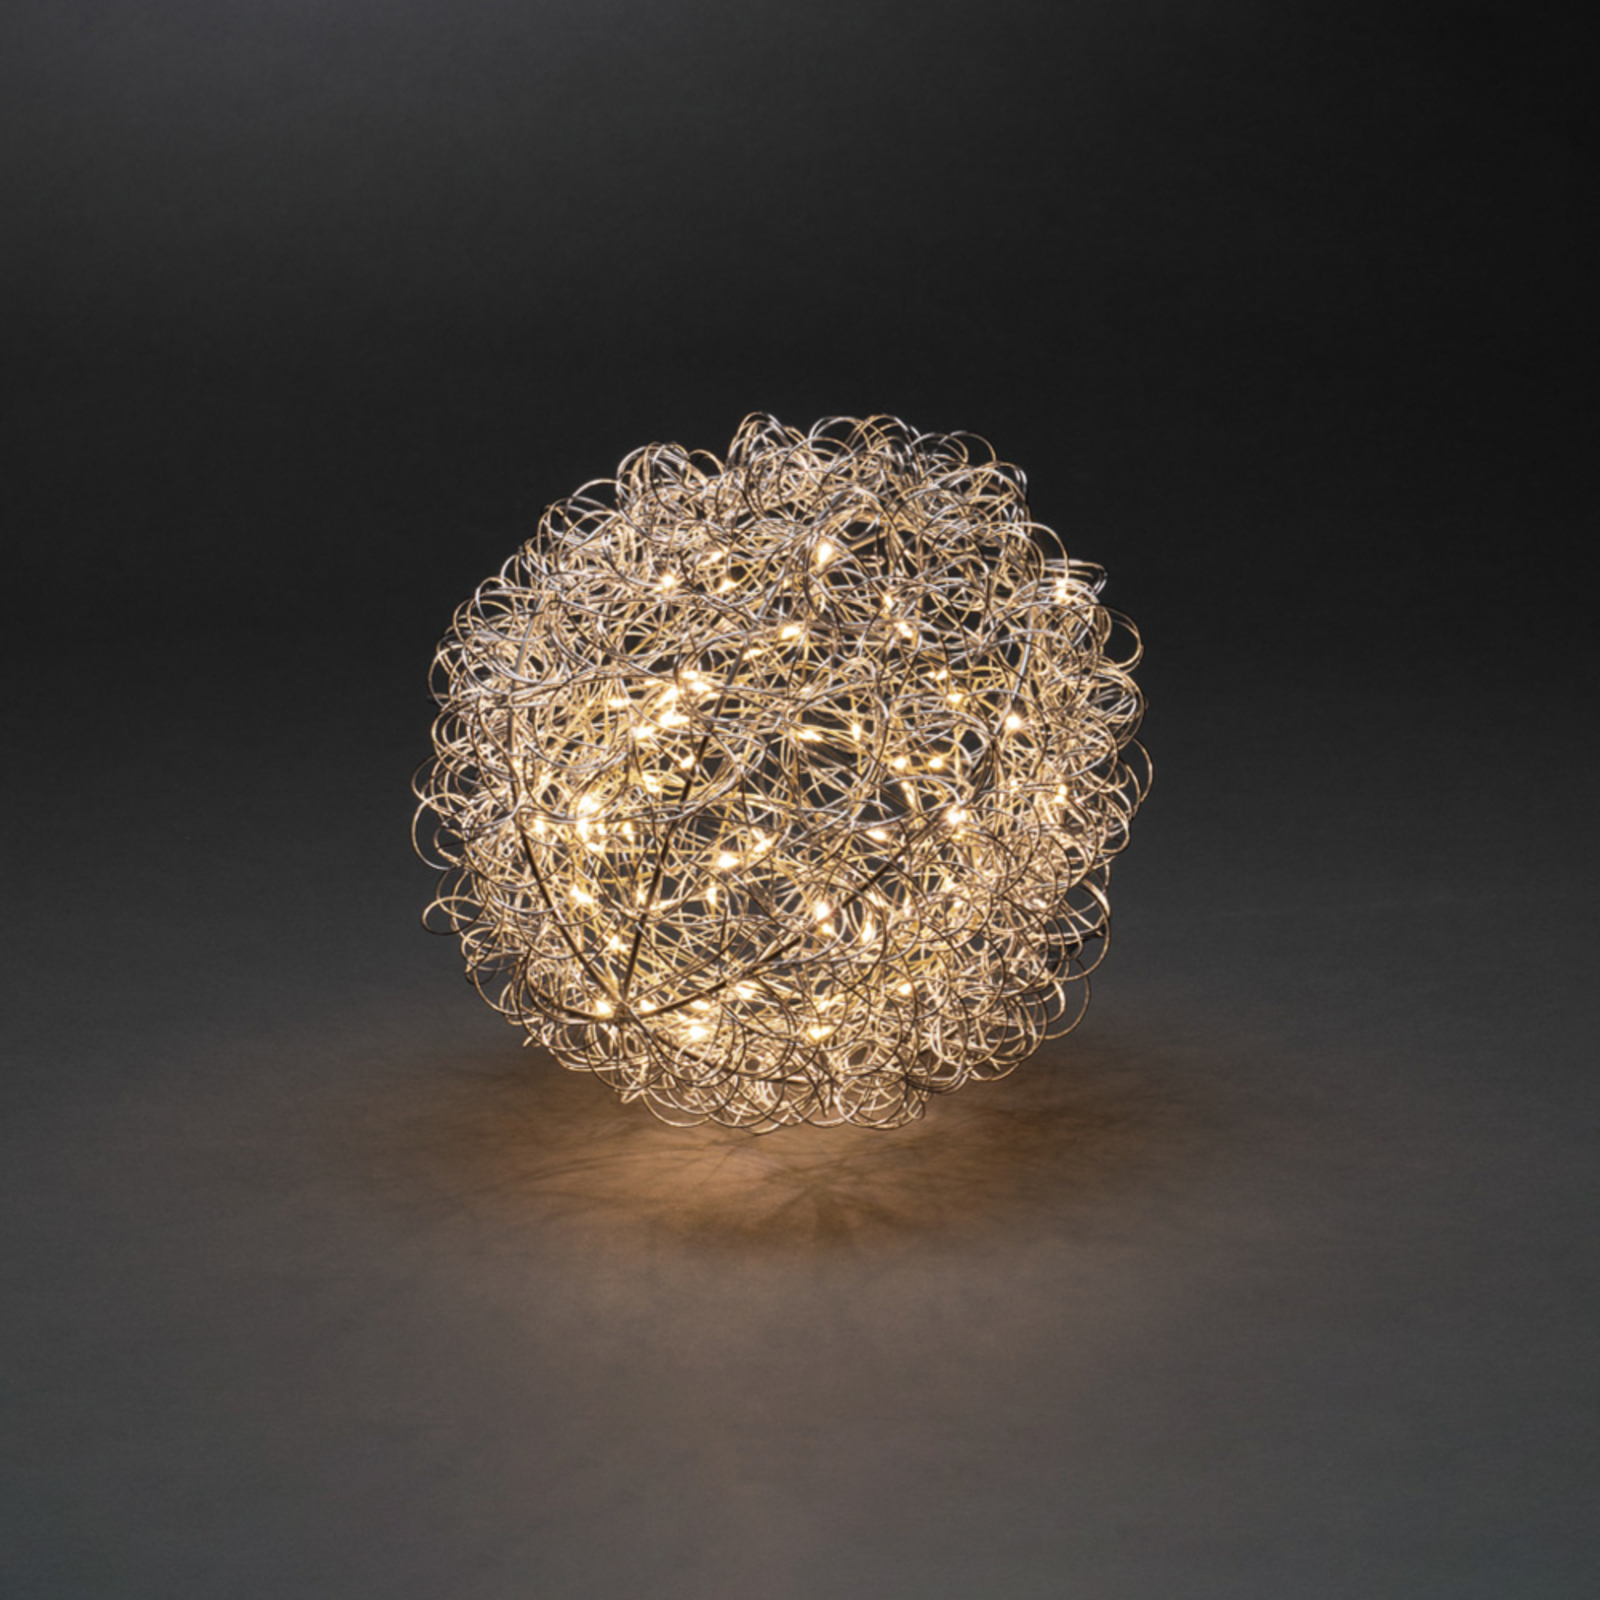 LED decorative light wire ball, Ø 25cm, 80 LEDs